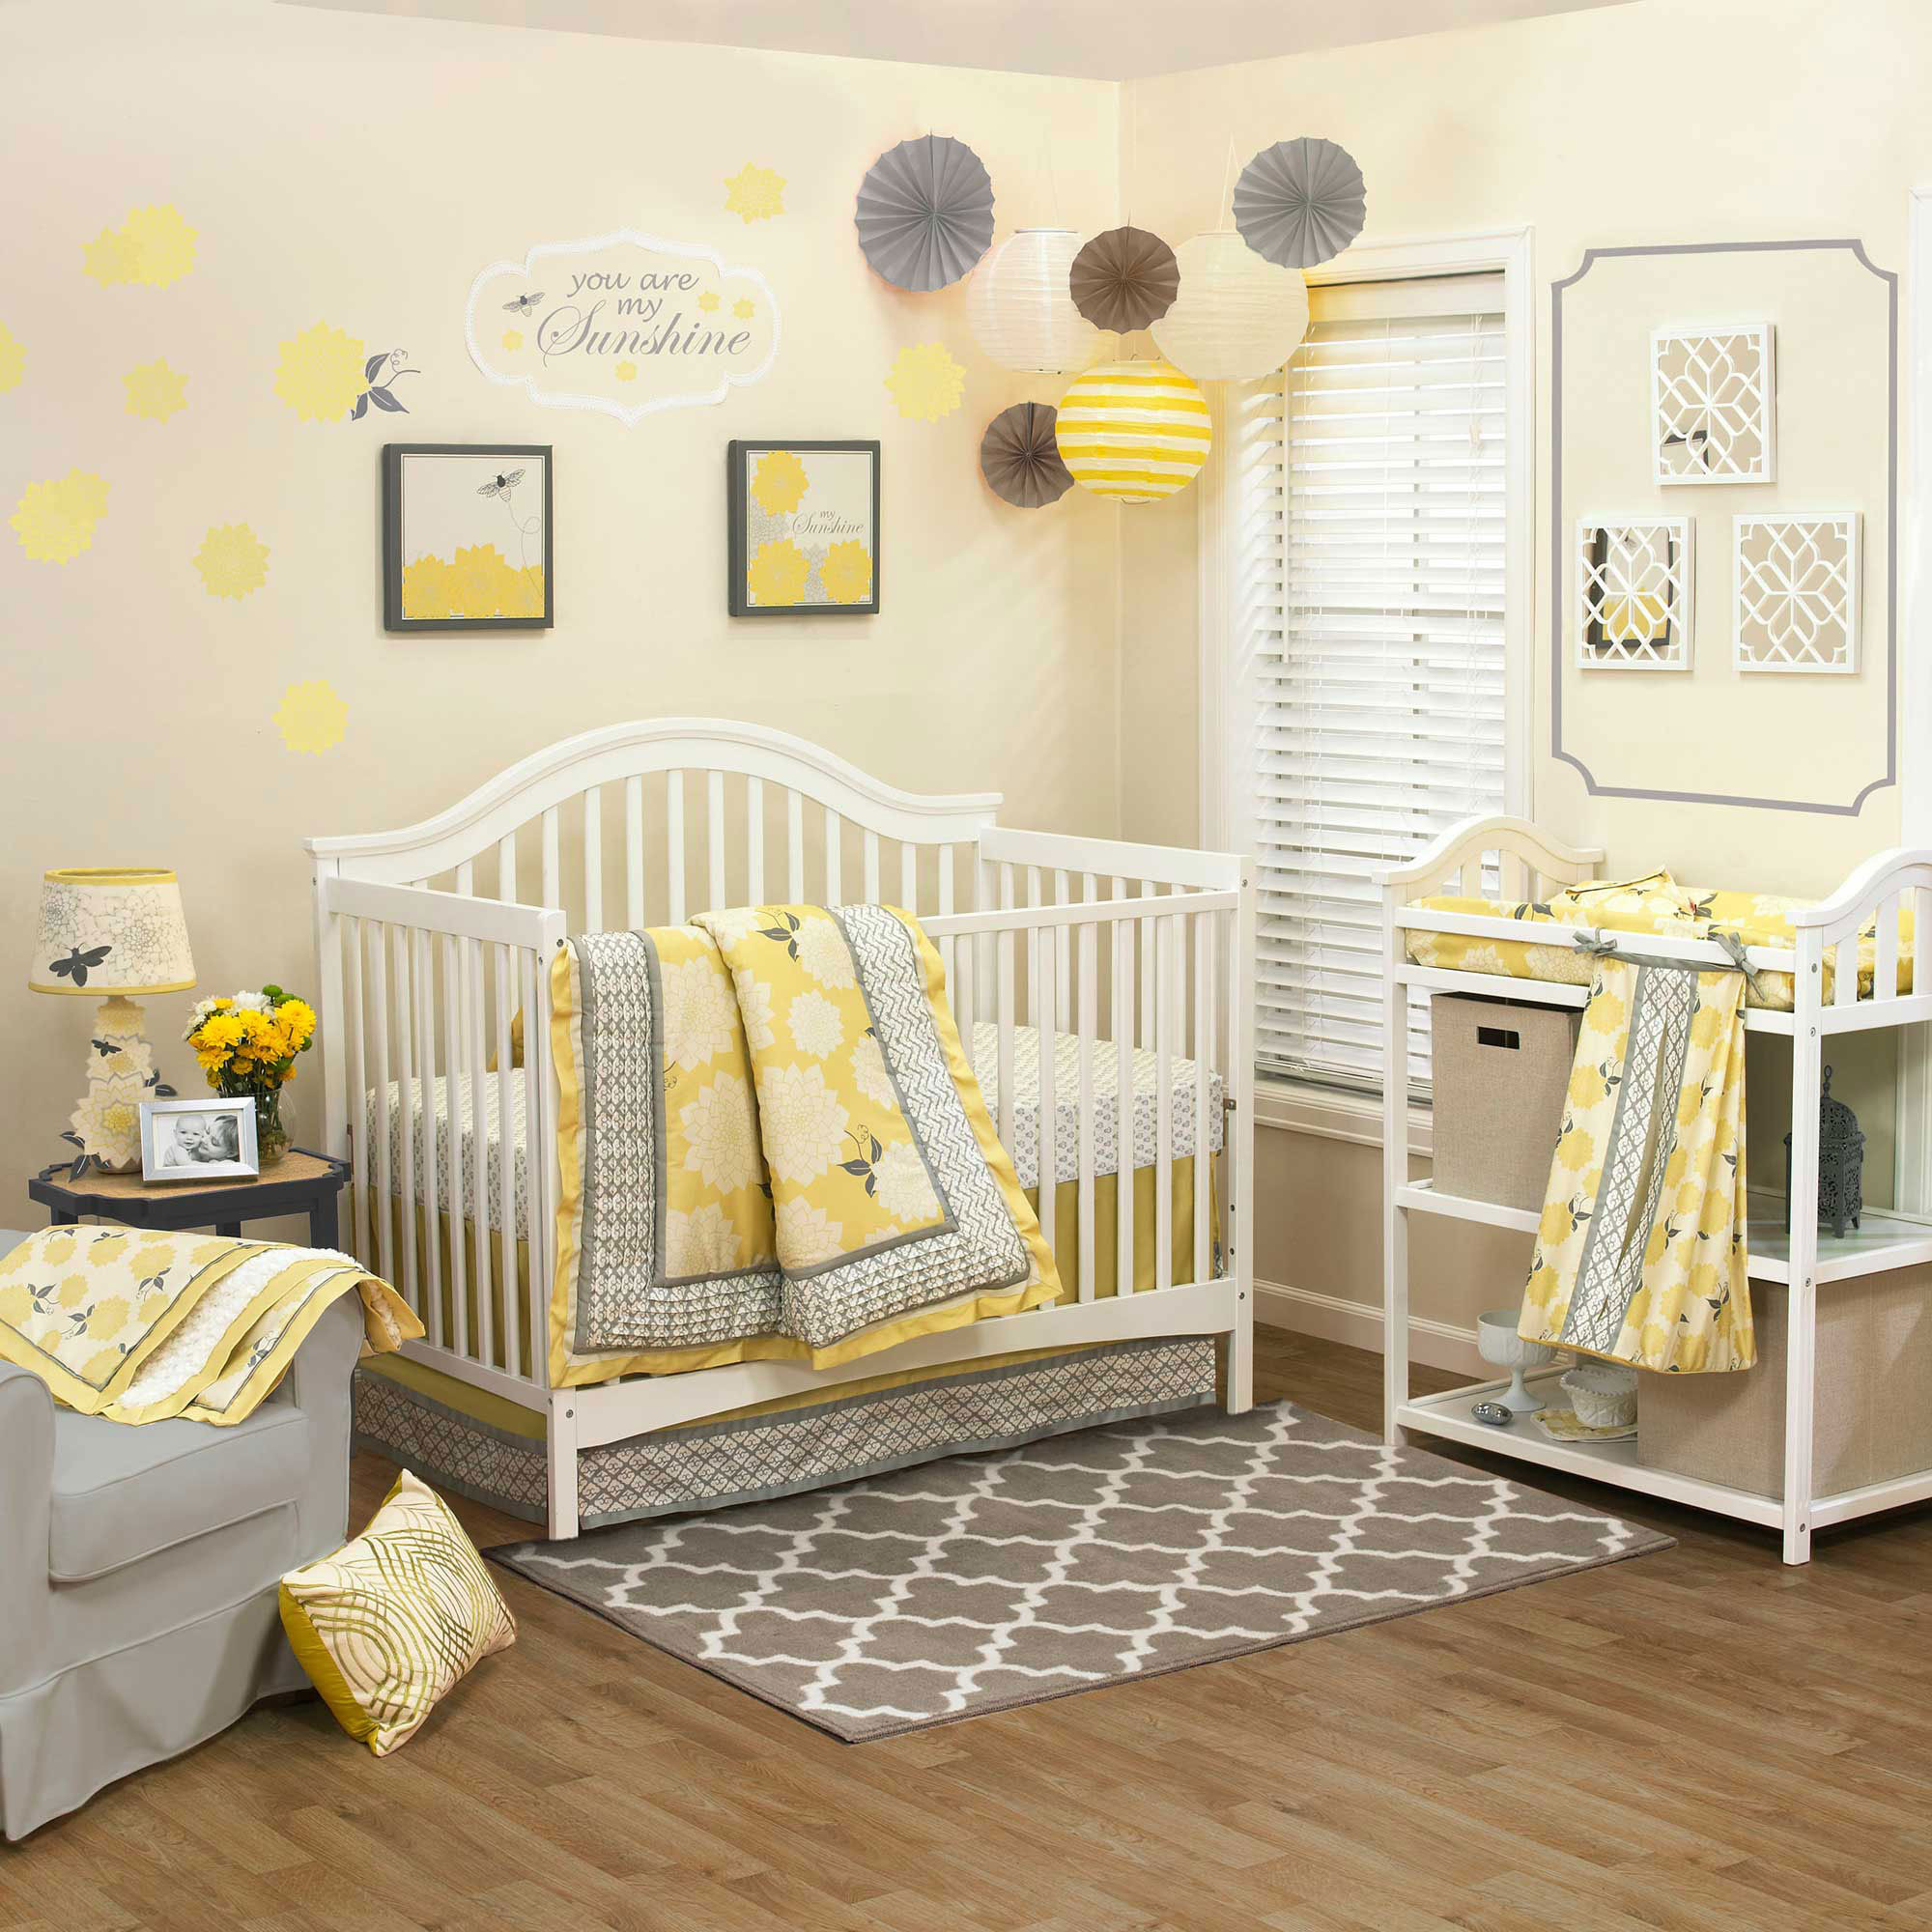 Baby Girls Room Decor
 Baby Girl Nursery Ideas 10 Pretty Examples Decorating Room